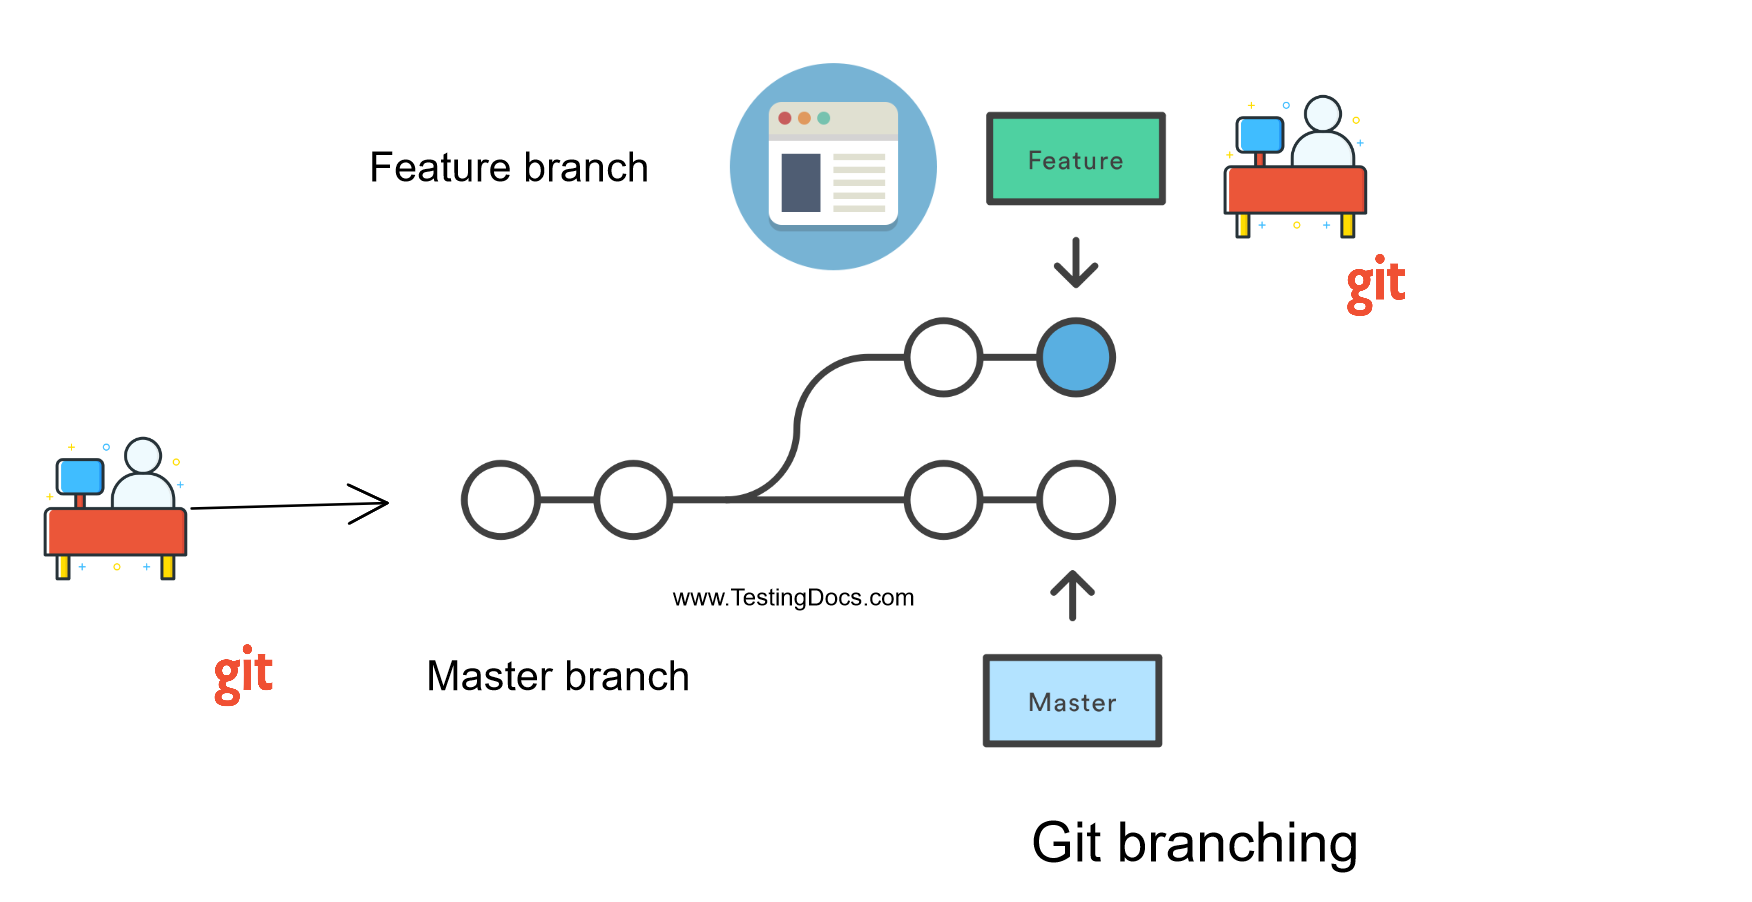 git create branch